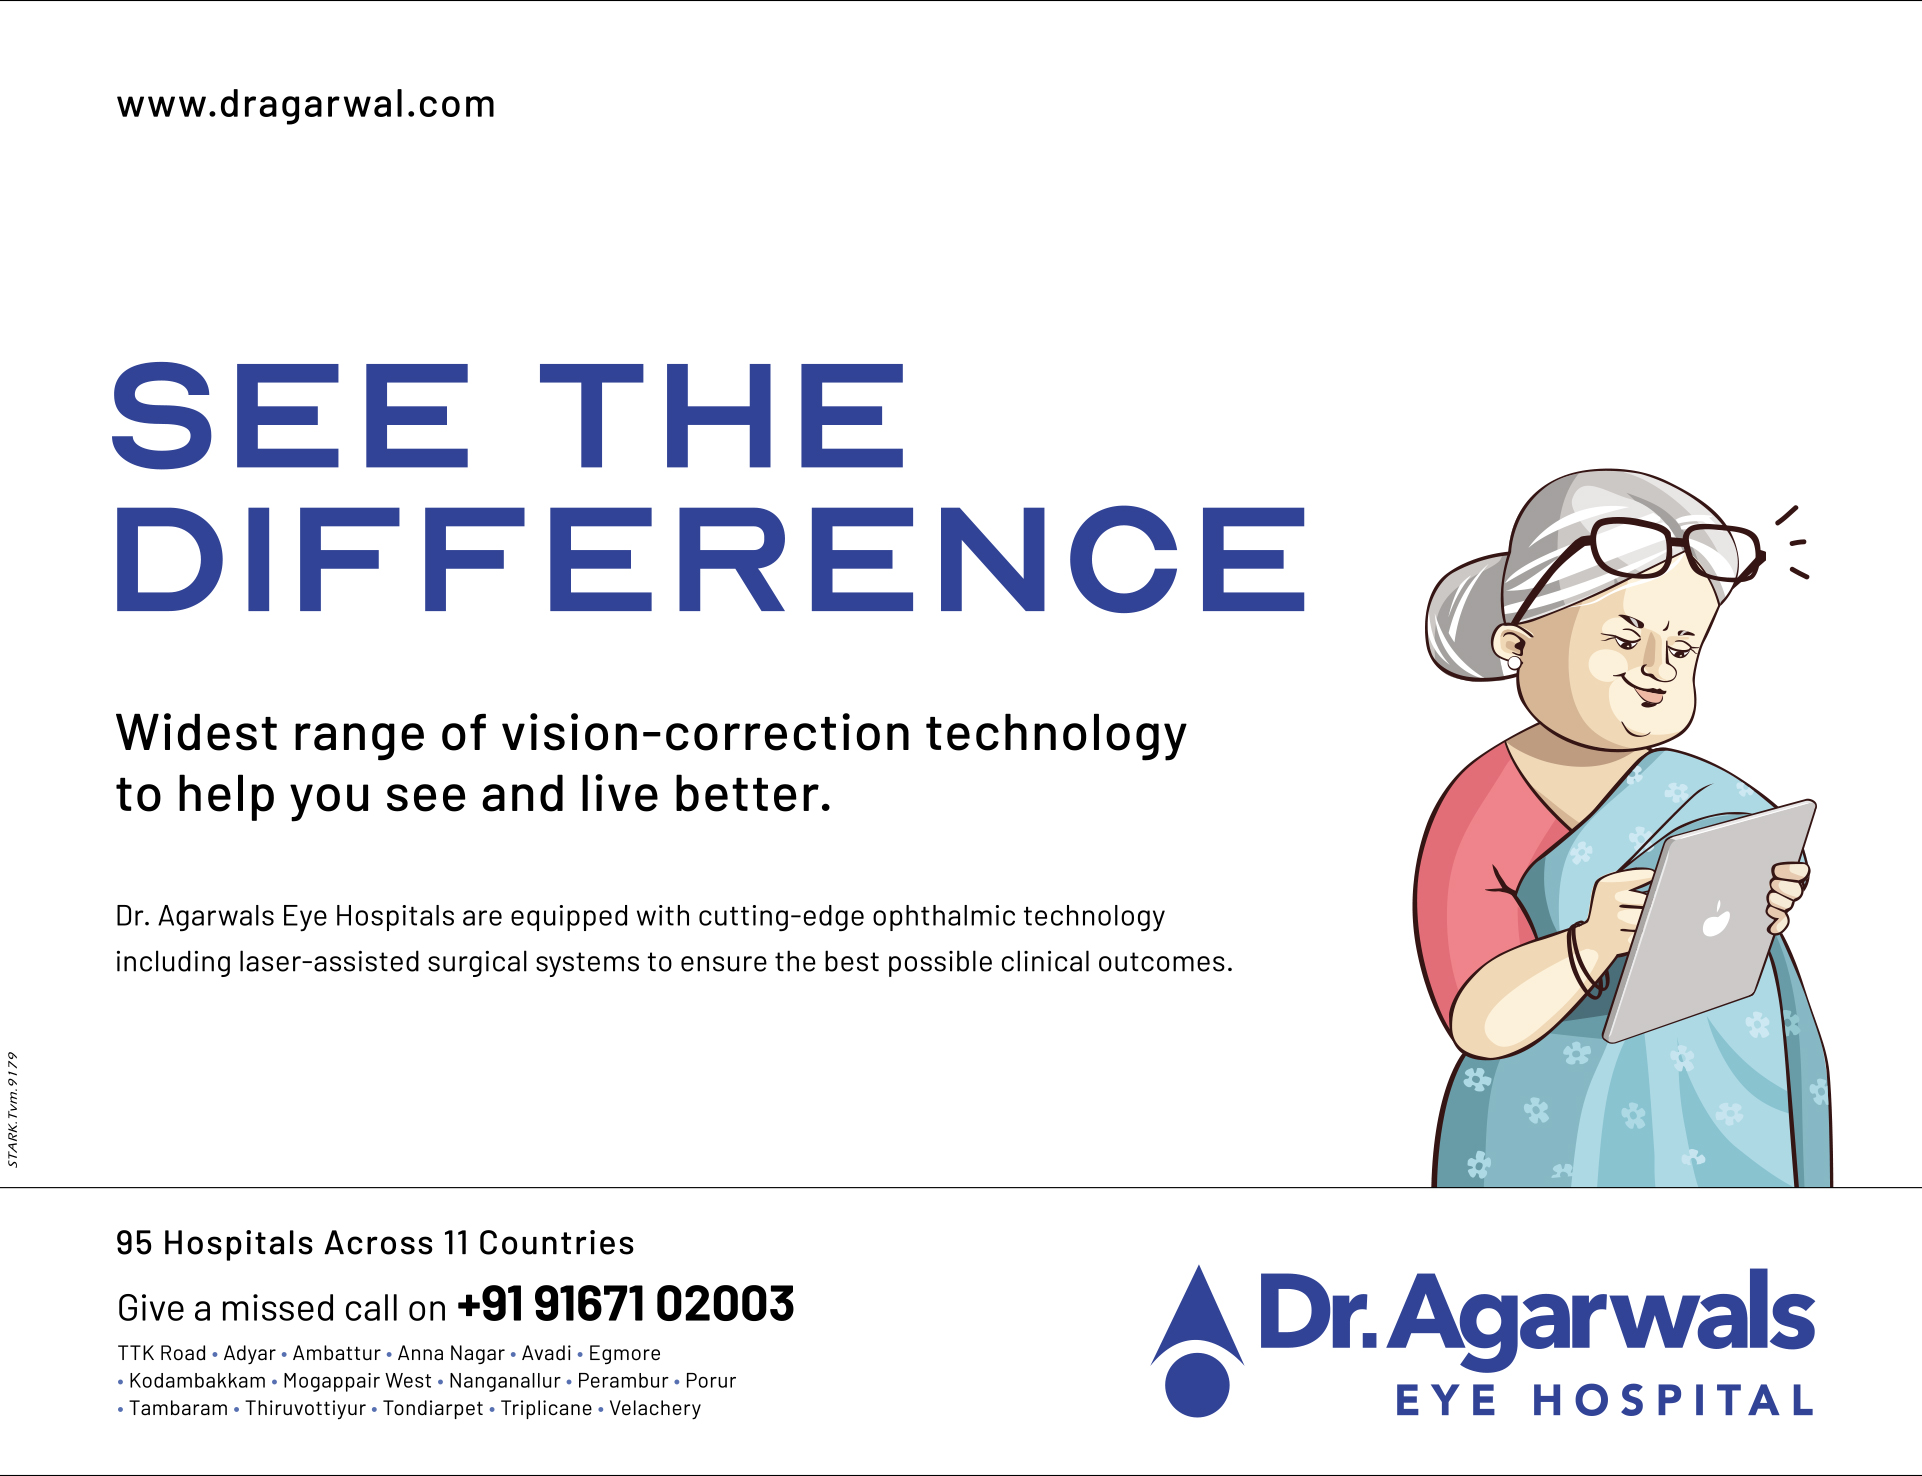 Dr.Agarwals Eye Hospital - Widest Range of Vision Correction Technology